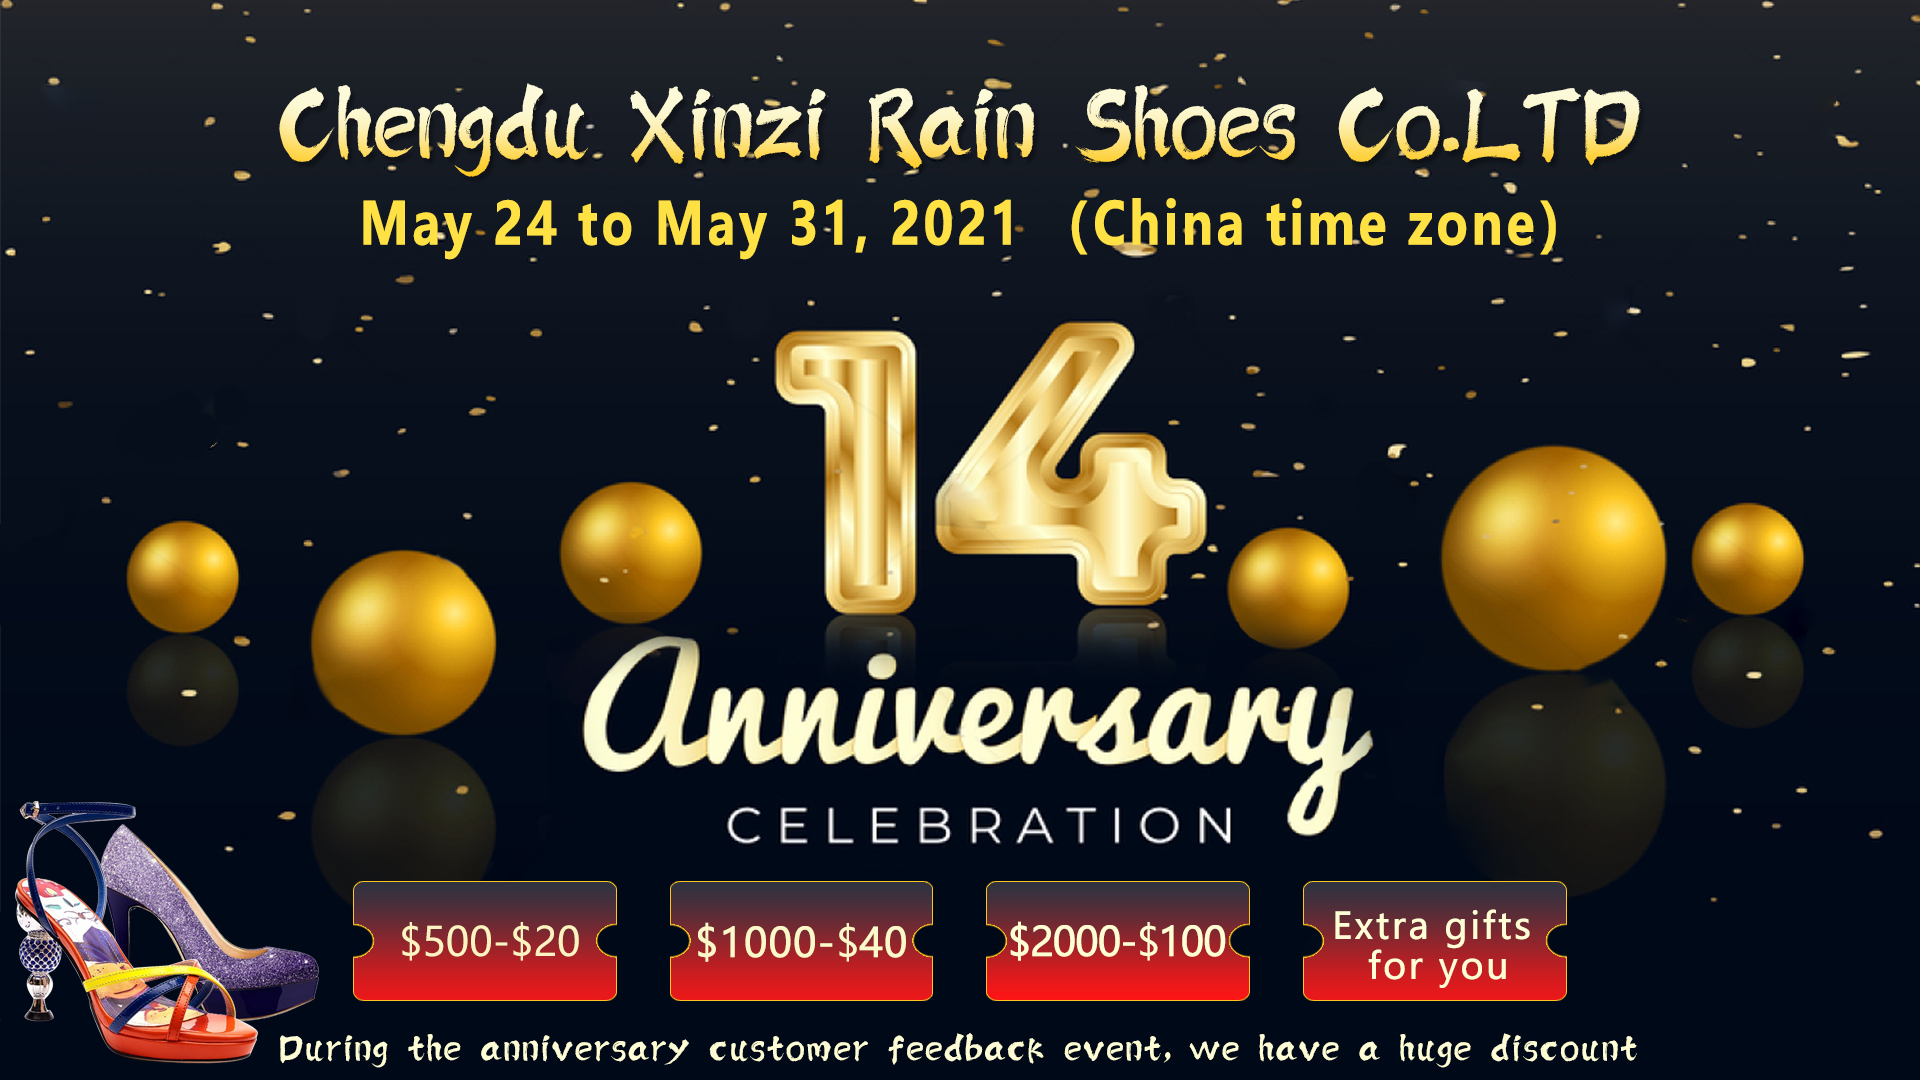 Xinzi Rain Shoes Co., Ltd., ຄົບຮອບ 14 ປີ